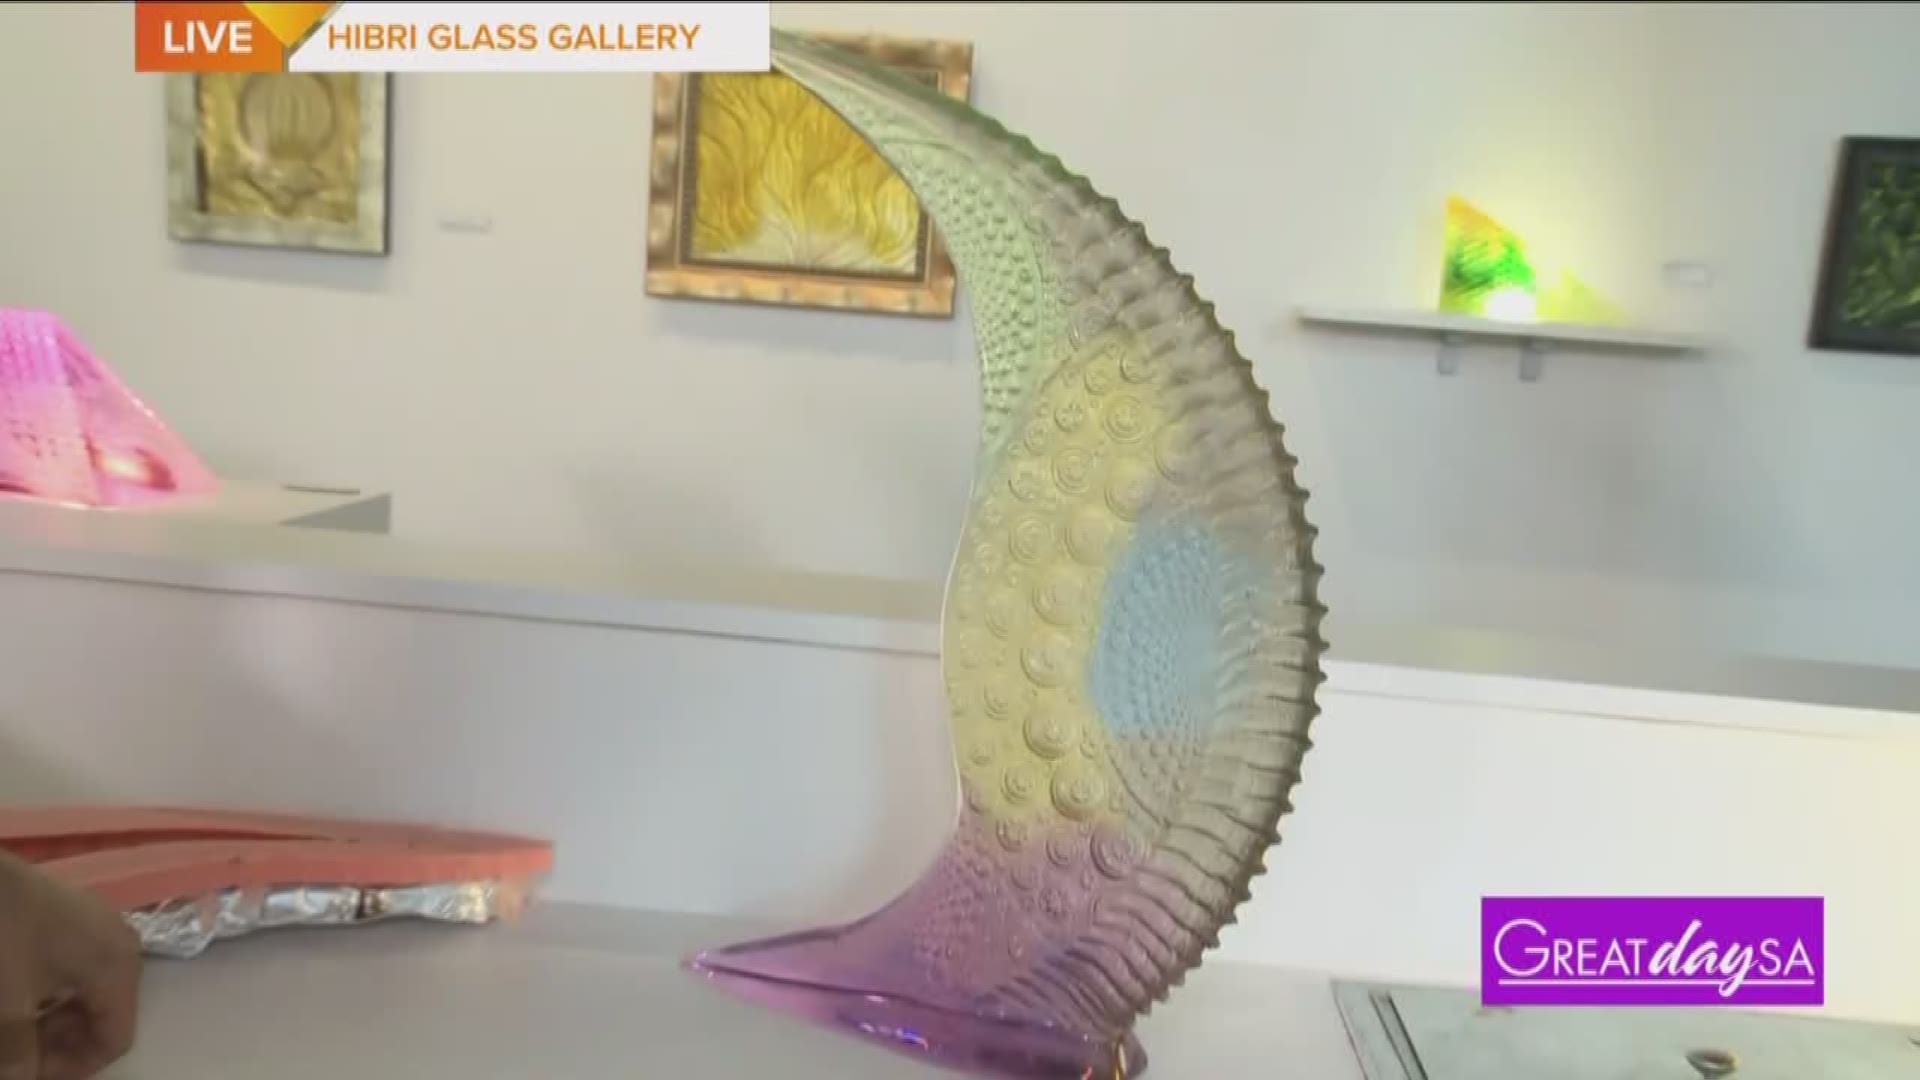 Hibri Glass Gallery